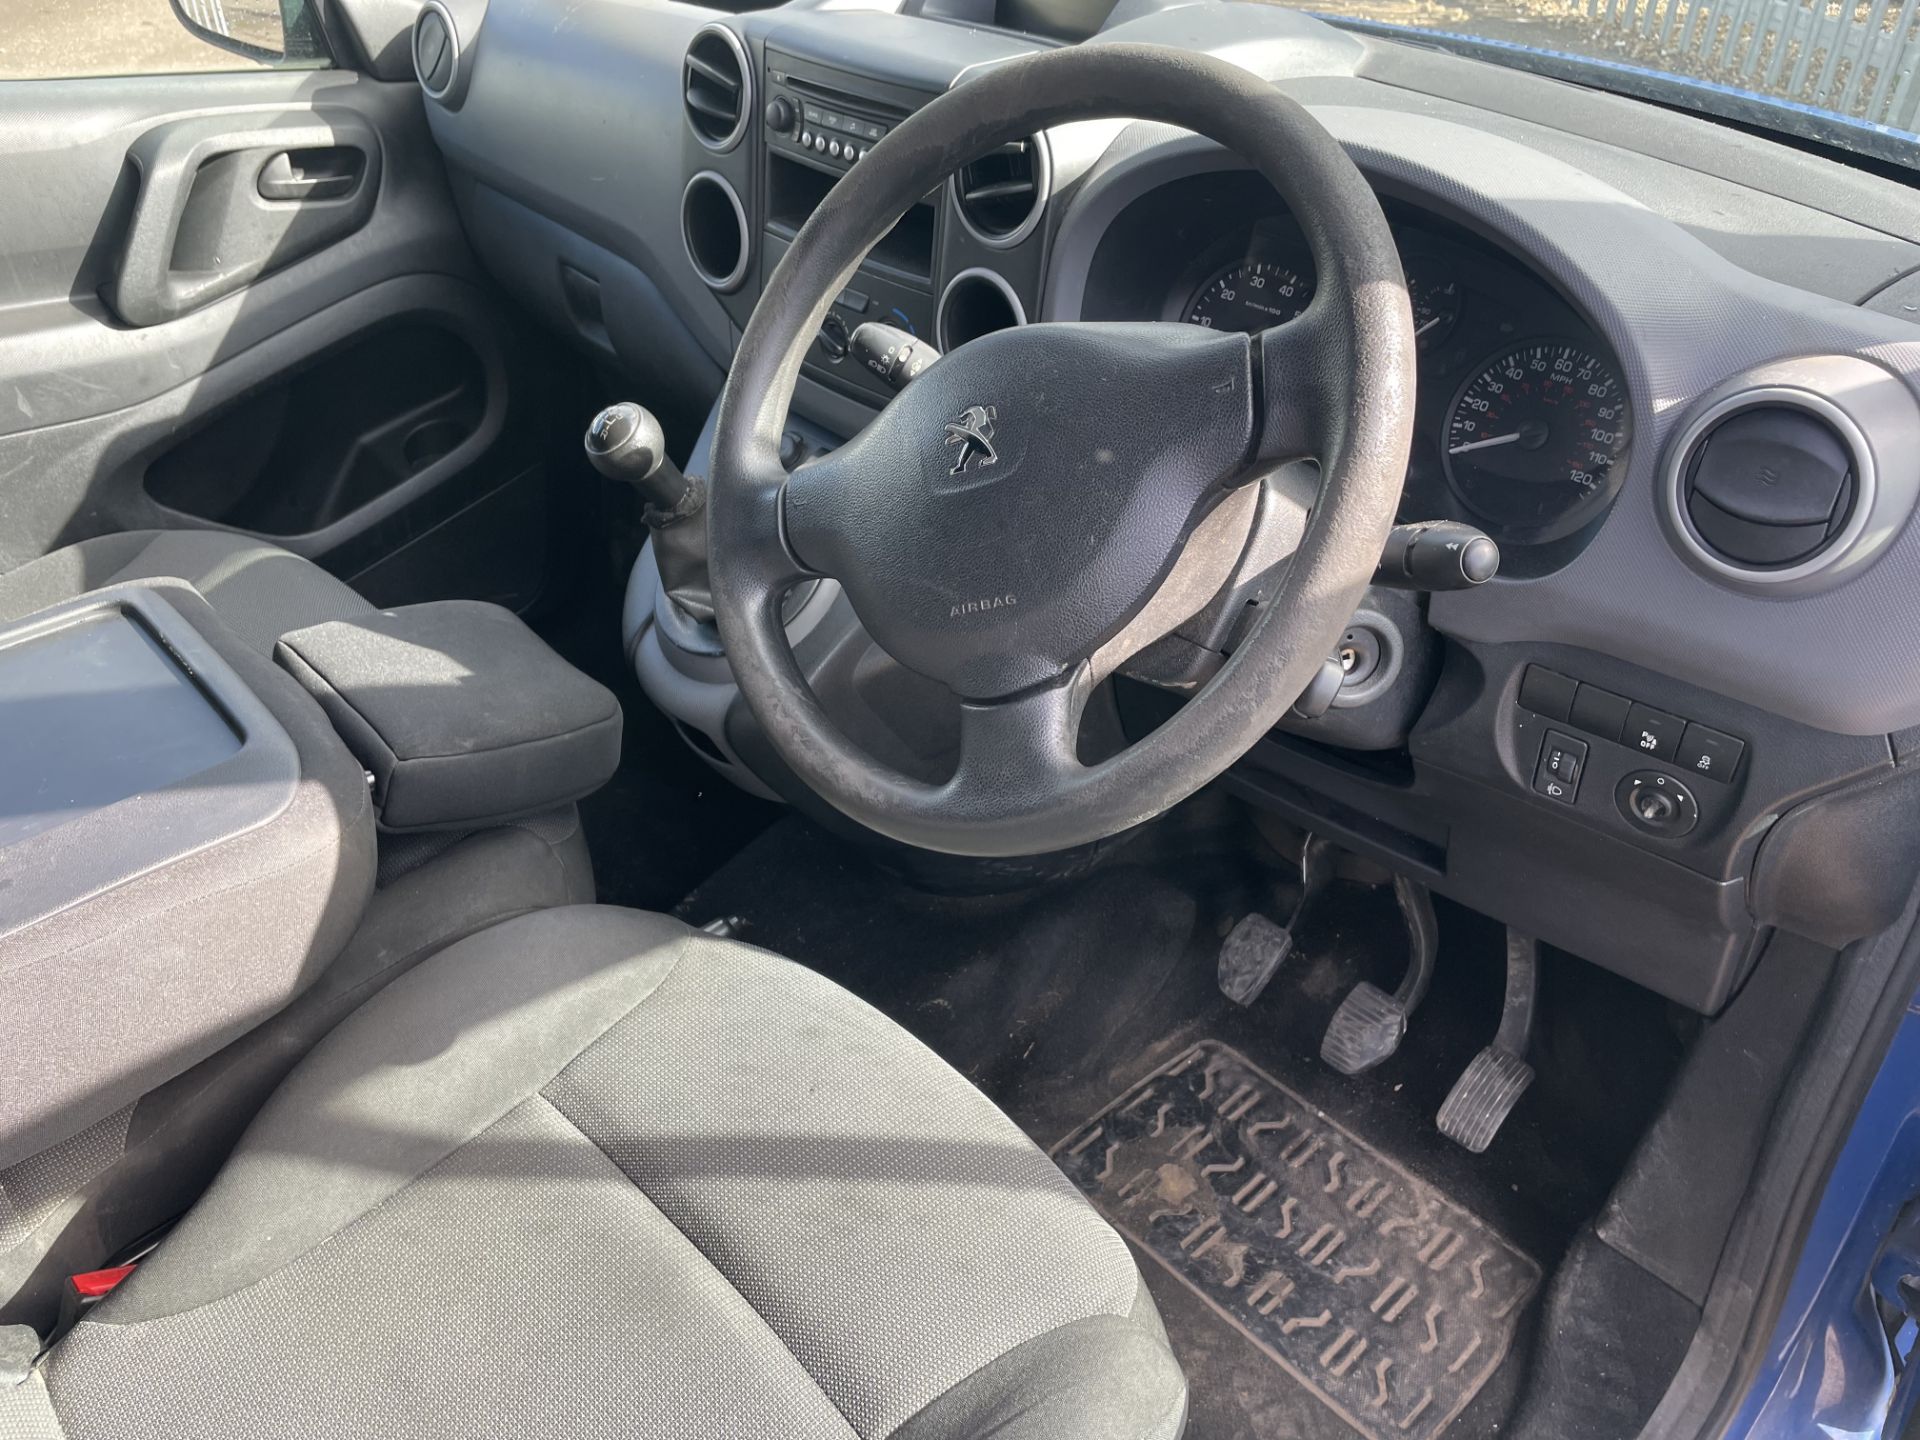 ** ON SALE ** Peugeot Partner S 1.5 BlueHDI 75 L1H1 2018 '18 Reg' - ULEZ Compliant - CD Player - Image 14 of 21